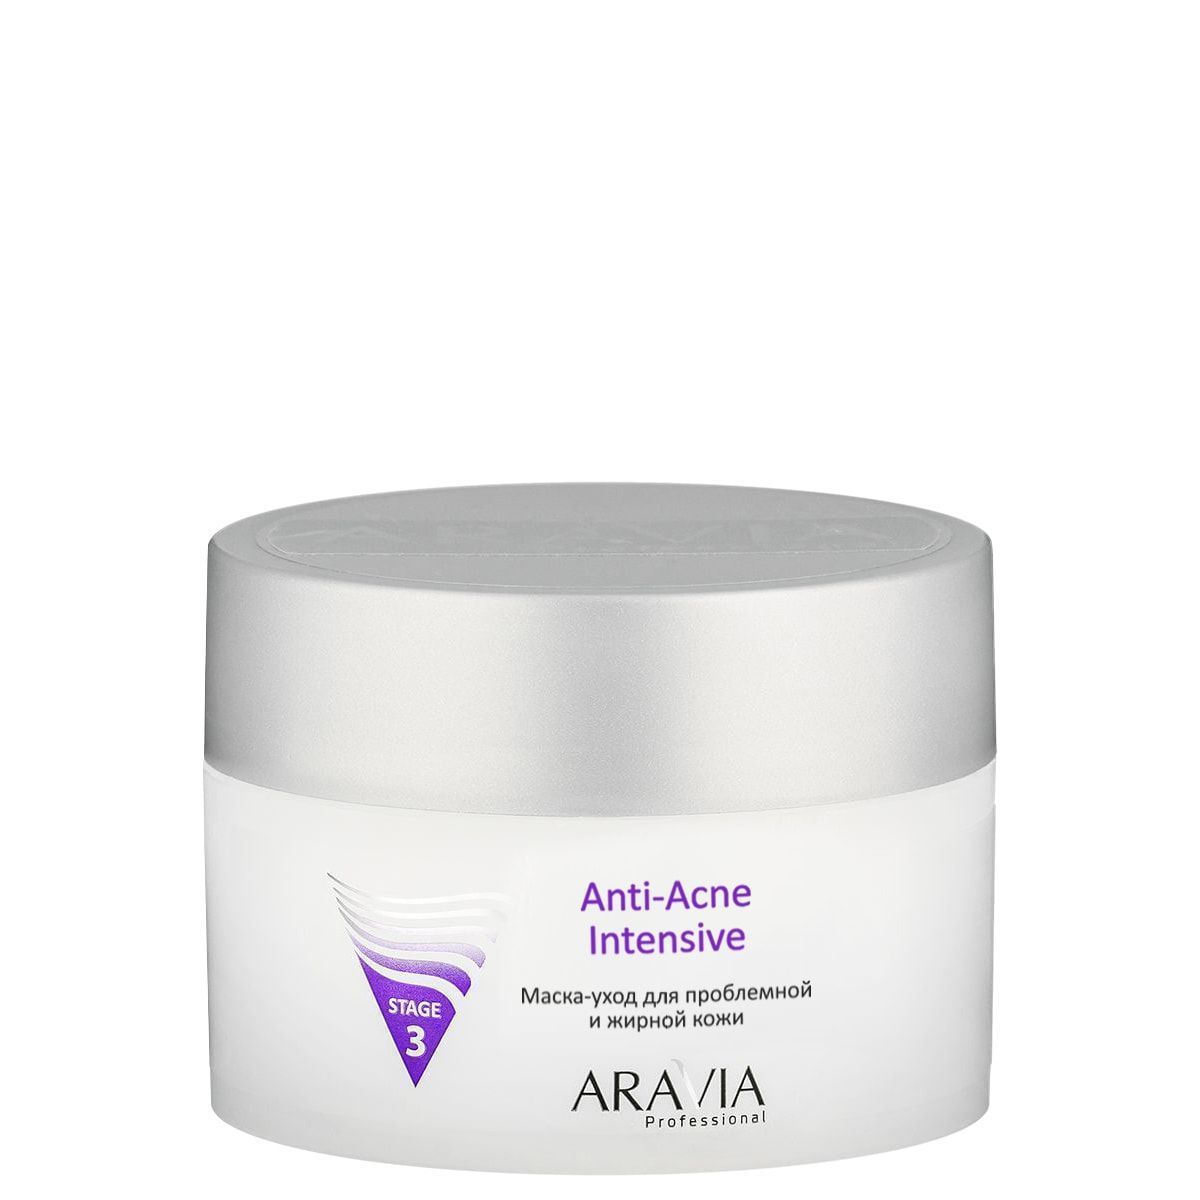 Маска-уход для проблемной и жирной кожи Anti-Acne Intensive, 150 мл, ARAVIA Professional. 6012